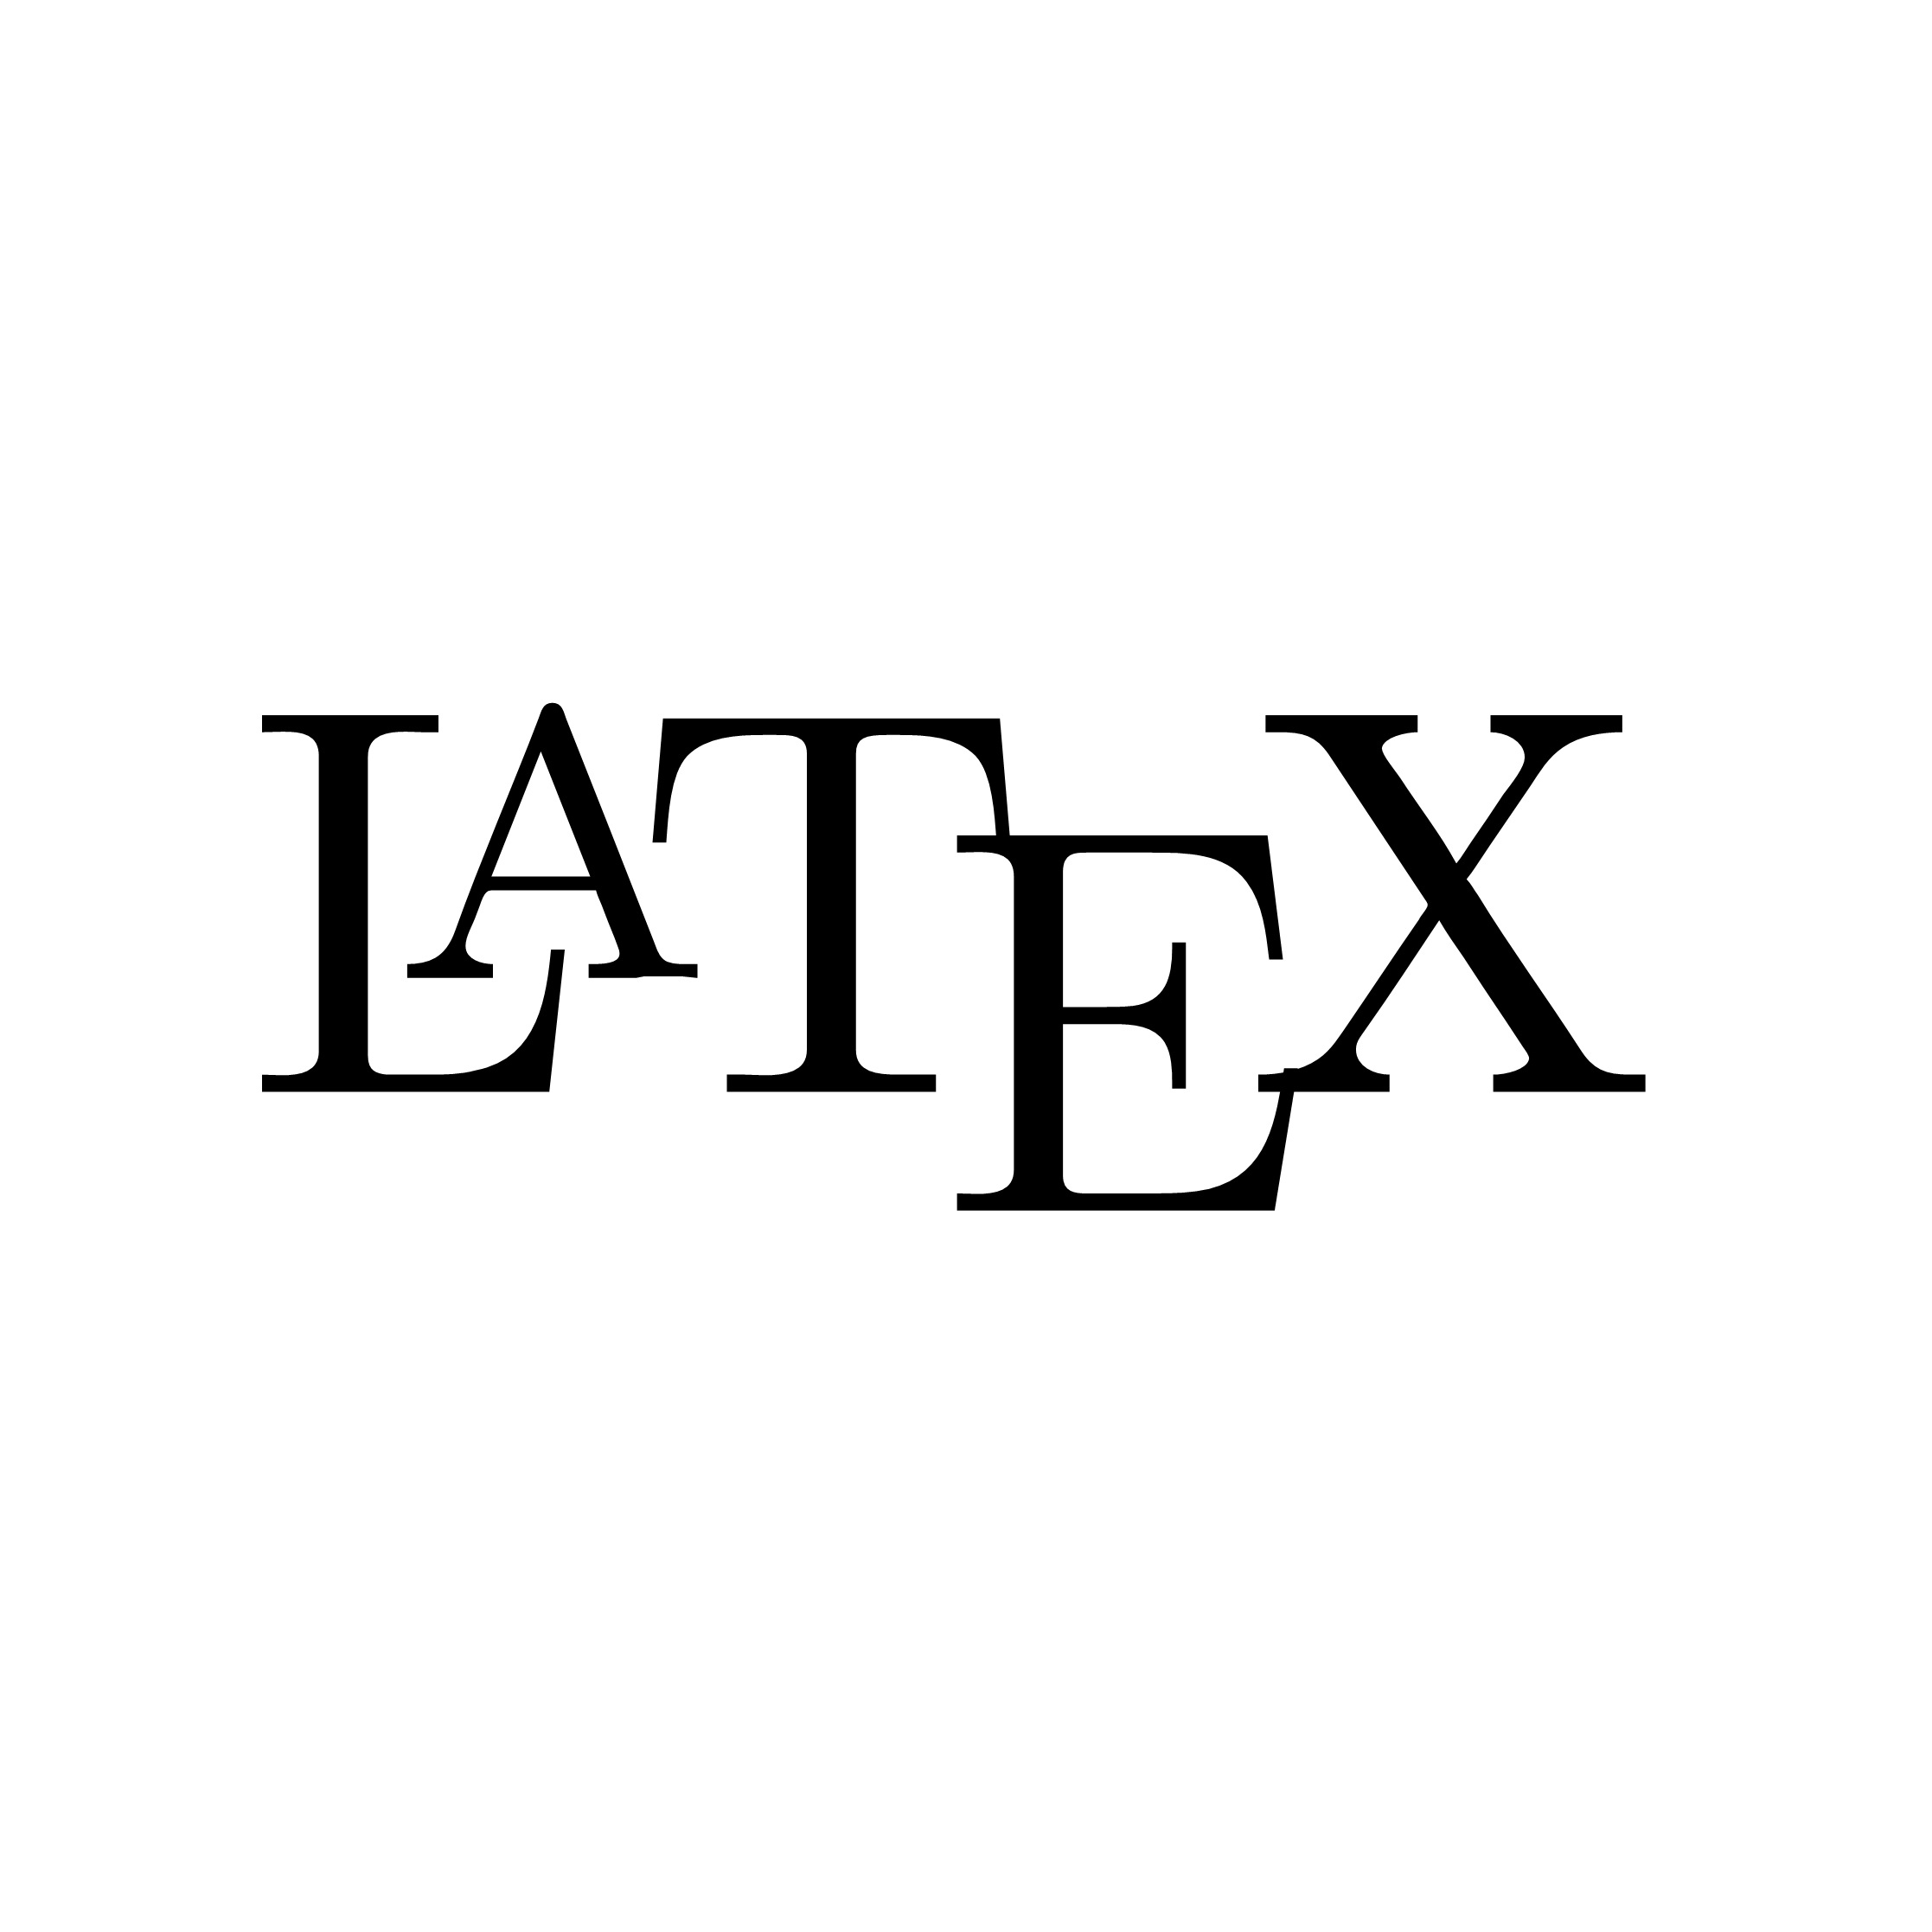 LaTeX Workshop